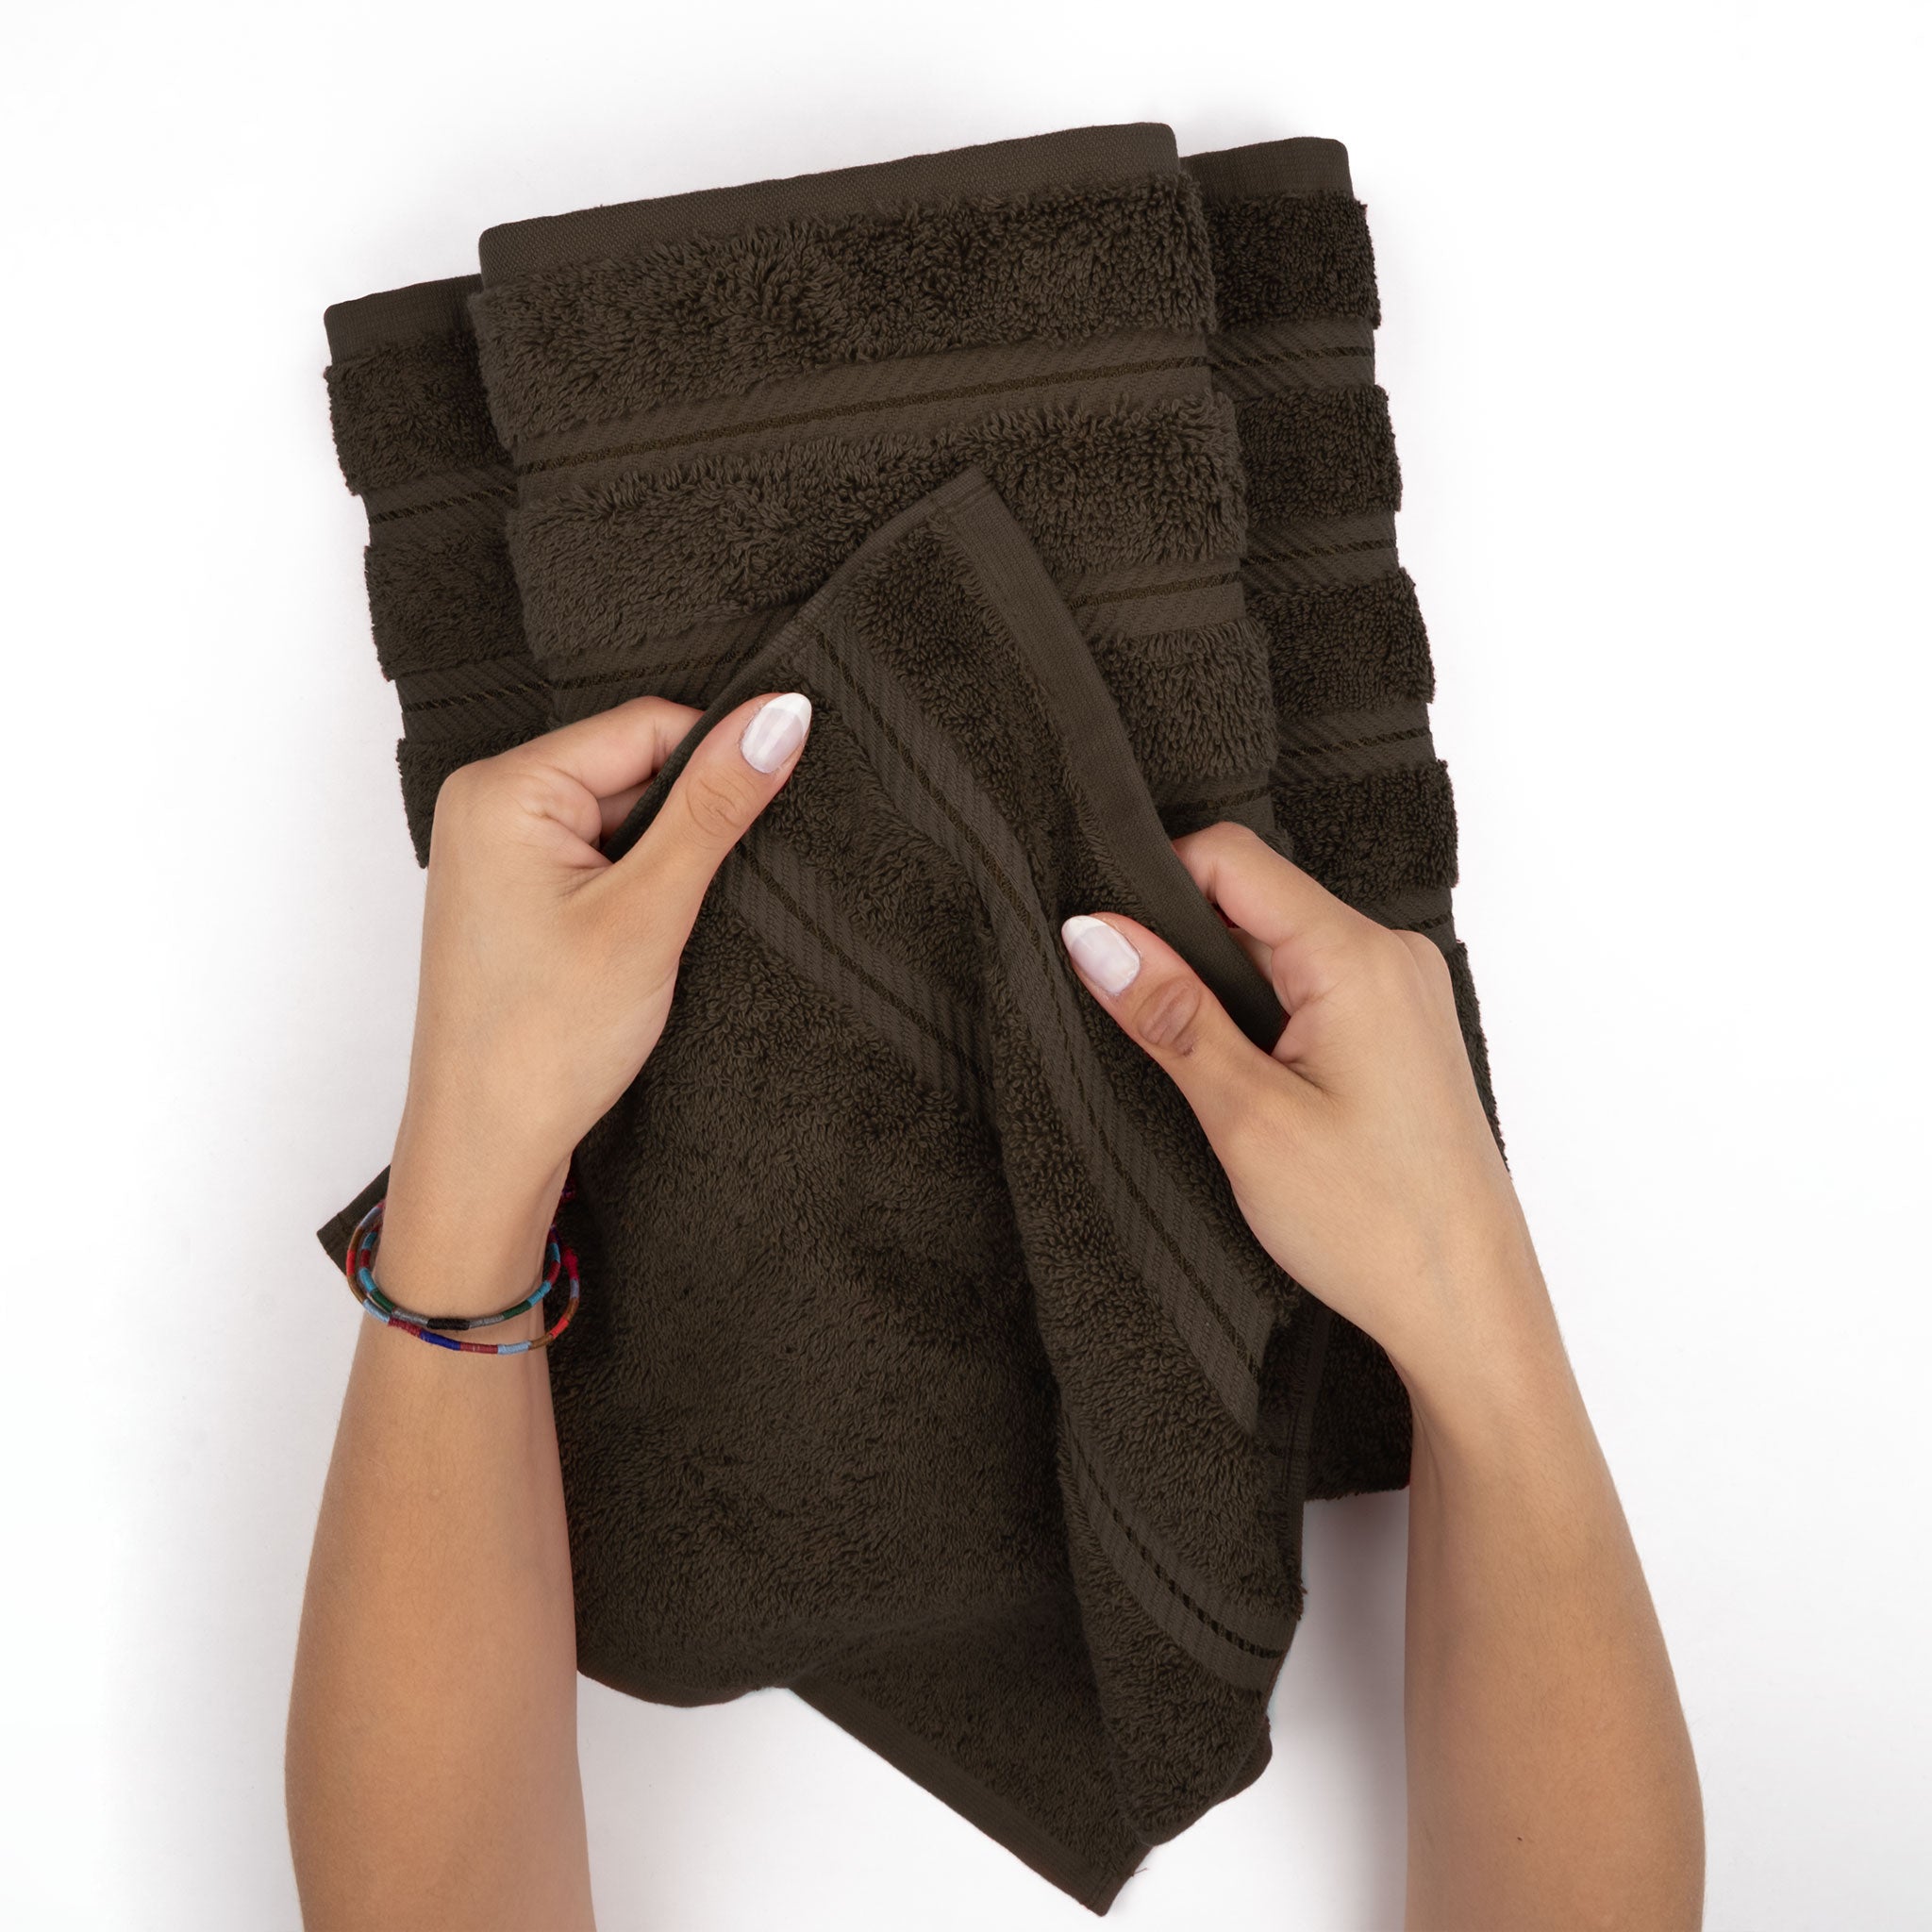 American Soft Linen - 35x70 Jumbo Bath Sheet Turkish Bath Towel - 16 Piece Case Pack - Chocolate-Brown - 4